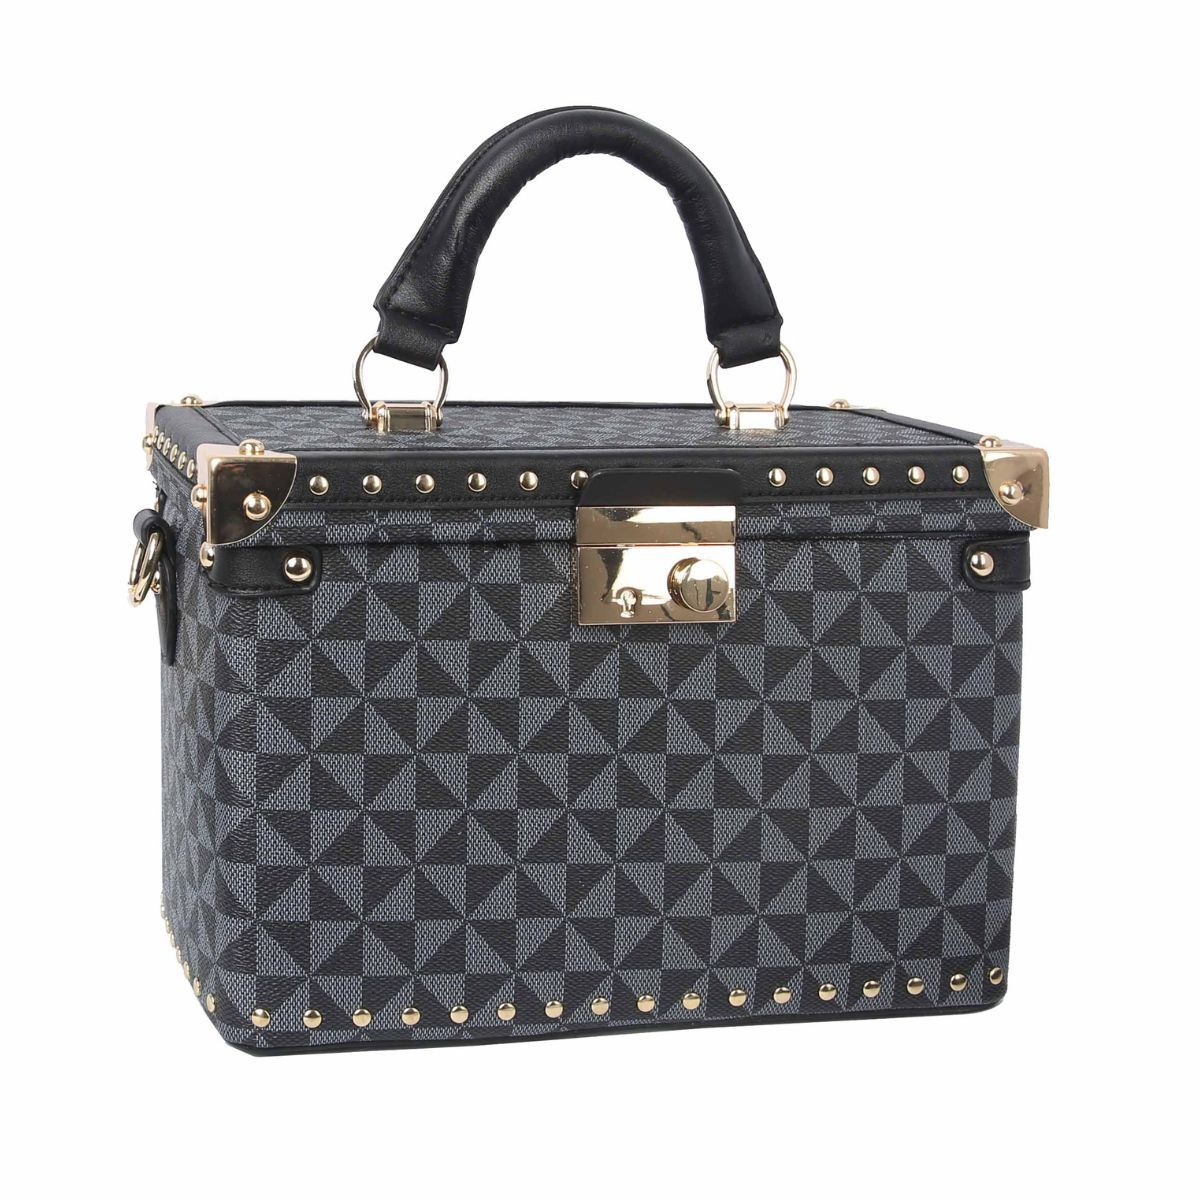 Aldo Box Bags & Handbags for Women for sale | eBay